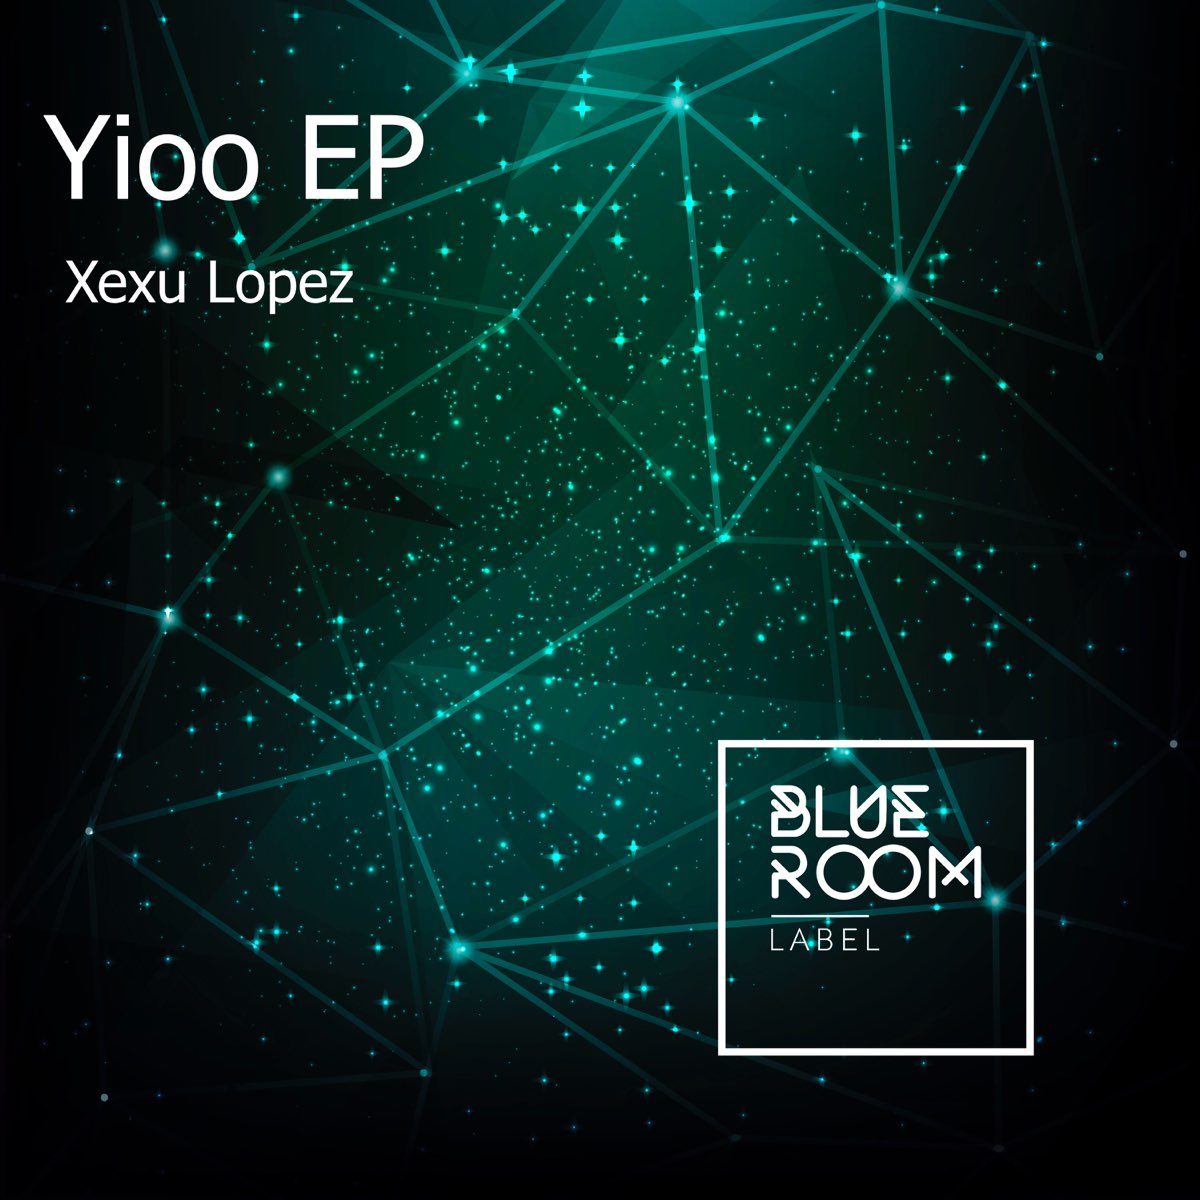 Yioo EP - Album by Xexu Lopez - Apple Music